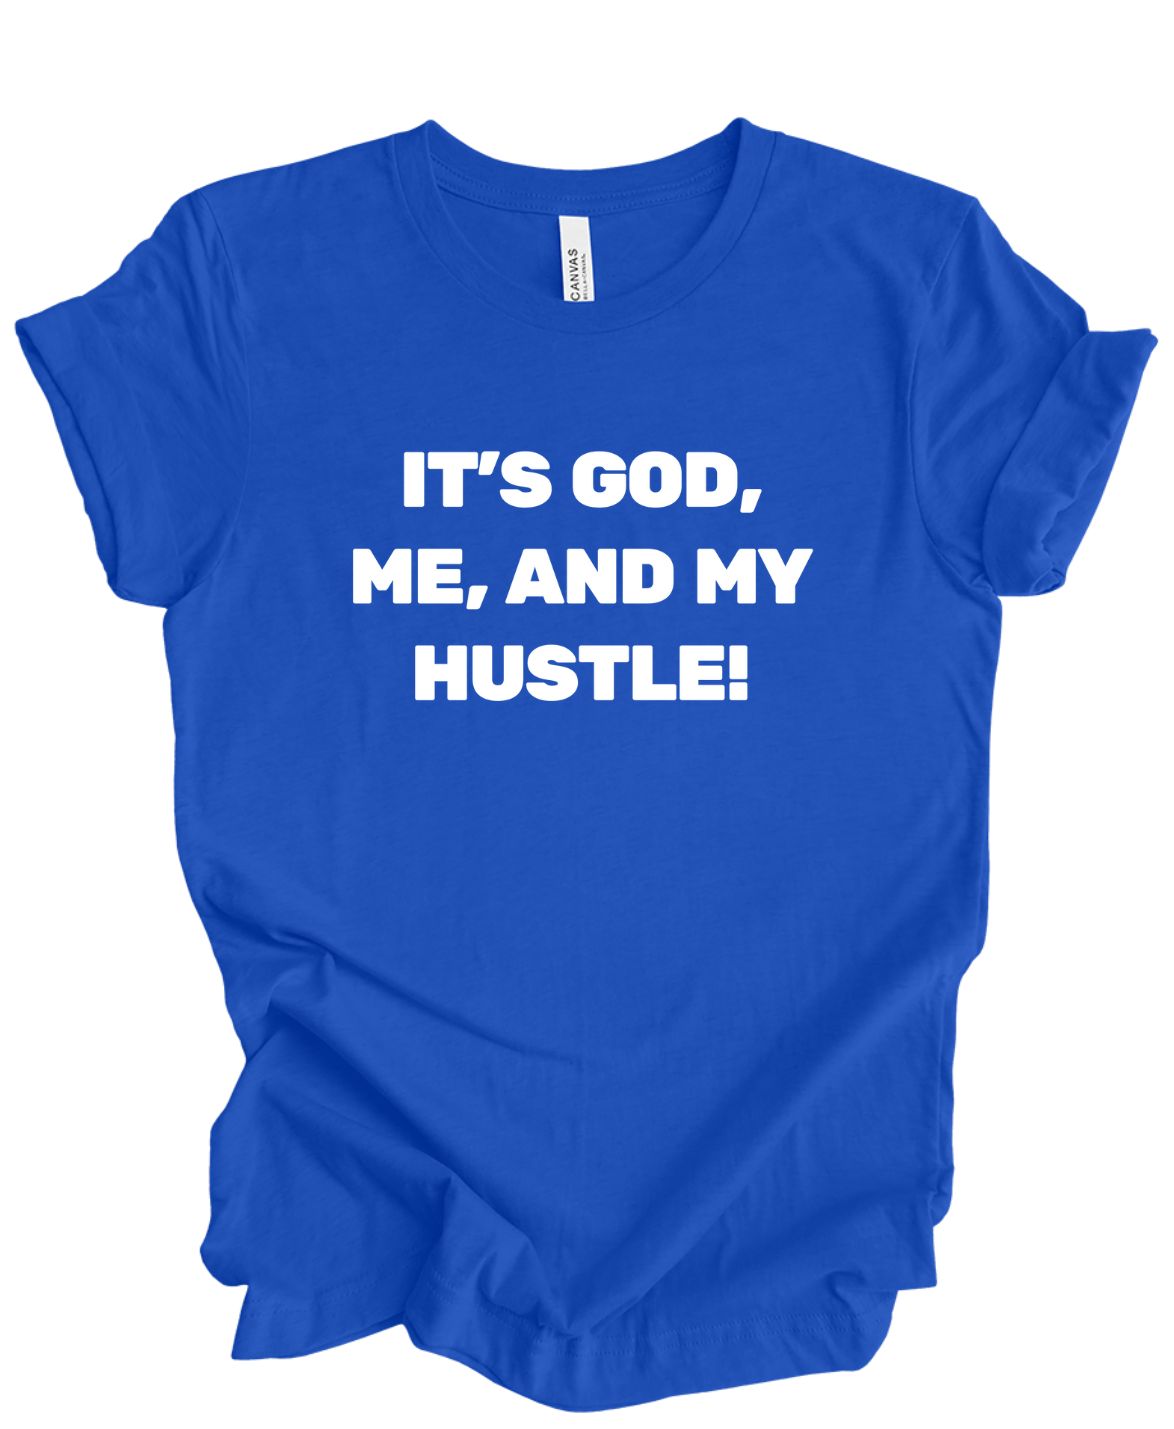 Hustlers T-Shirt Bundle